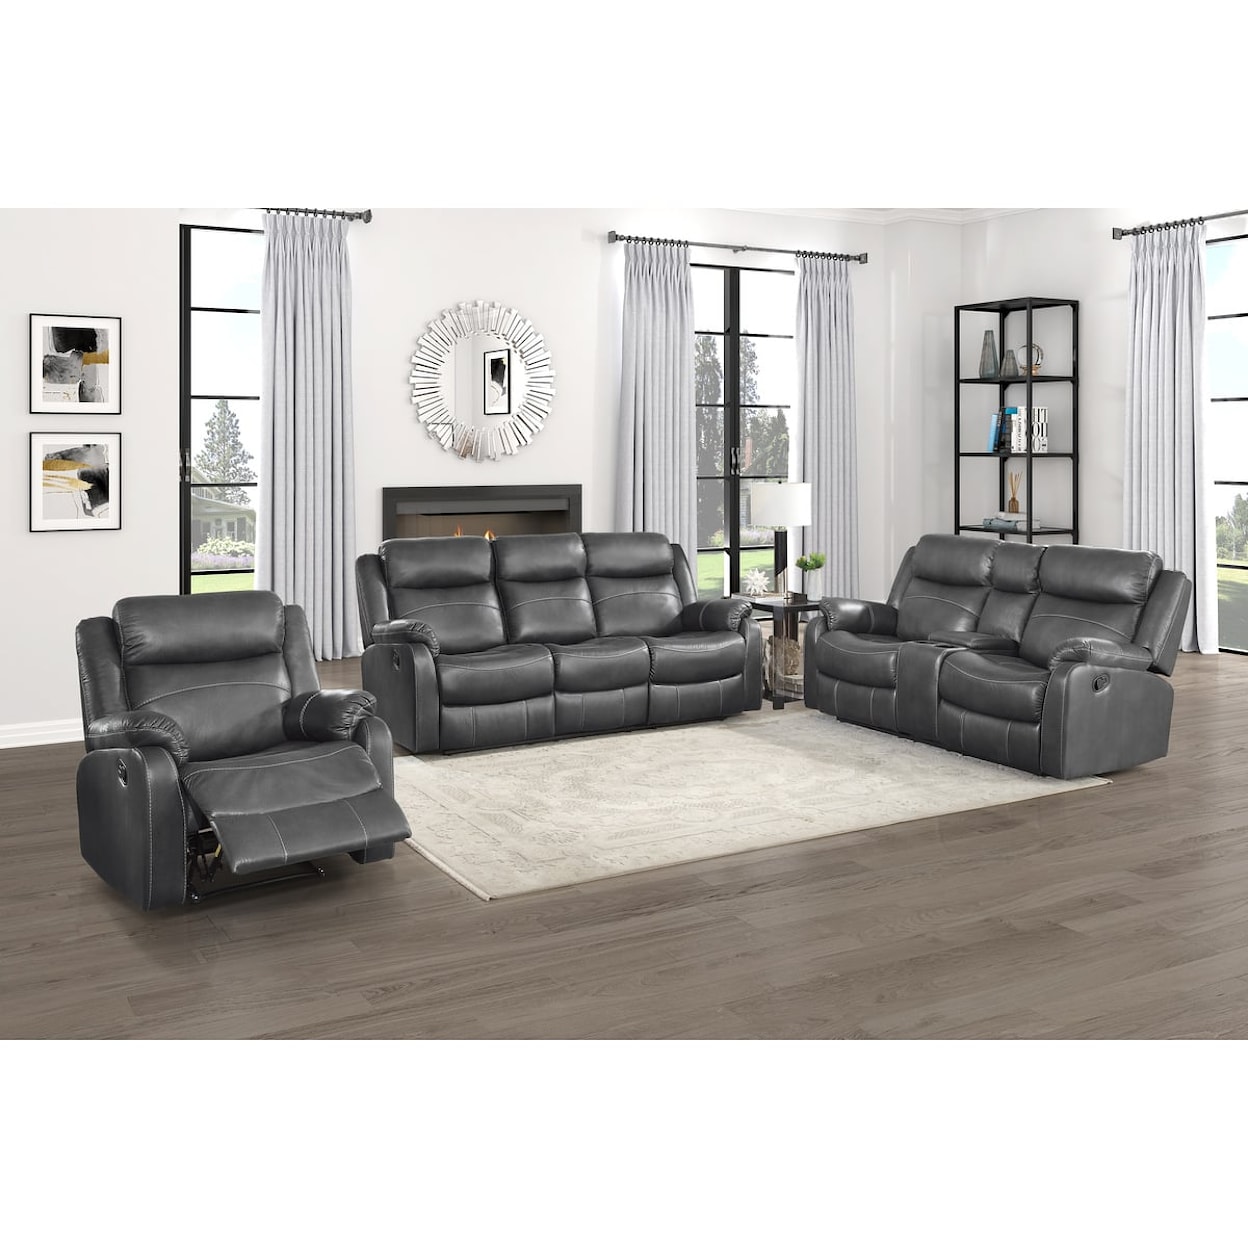 Homelegance Furniture Yerba Lay Flat Reclining Sofa